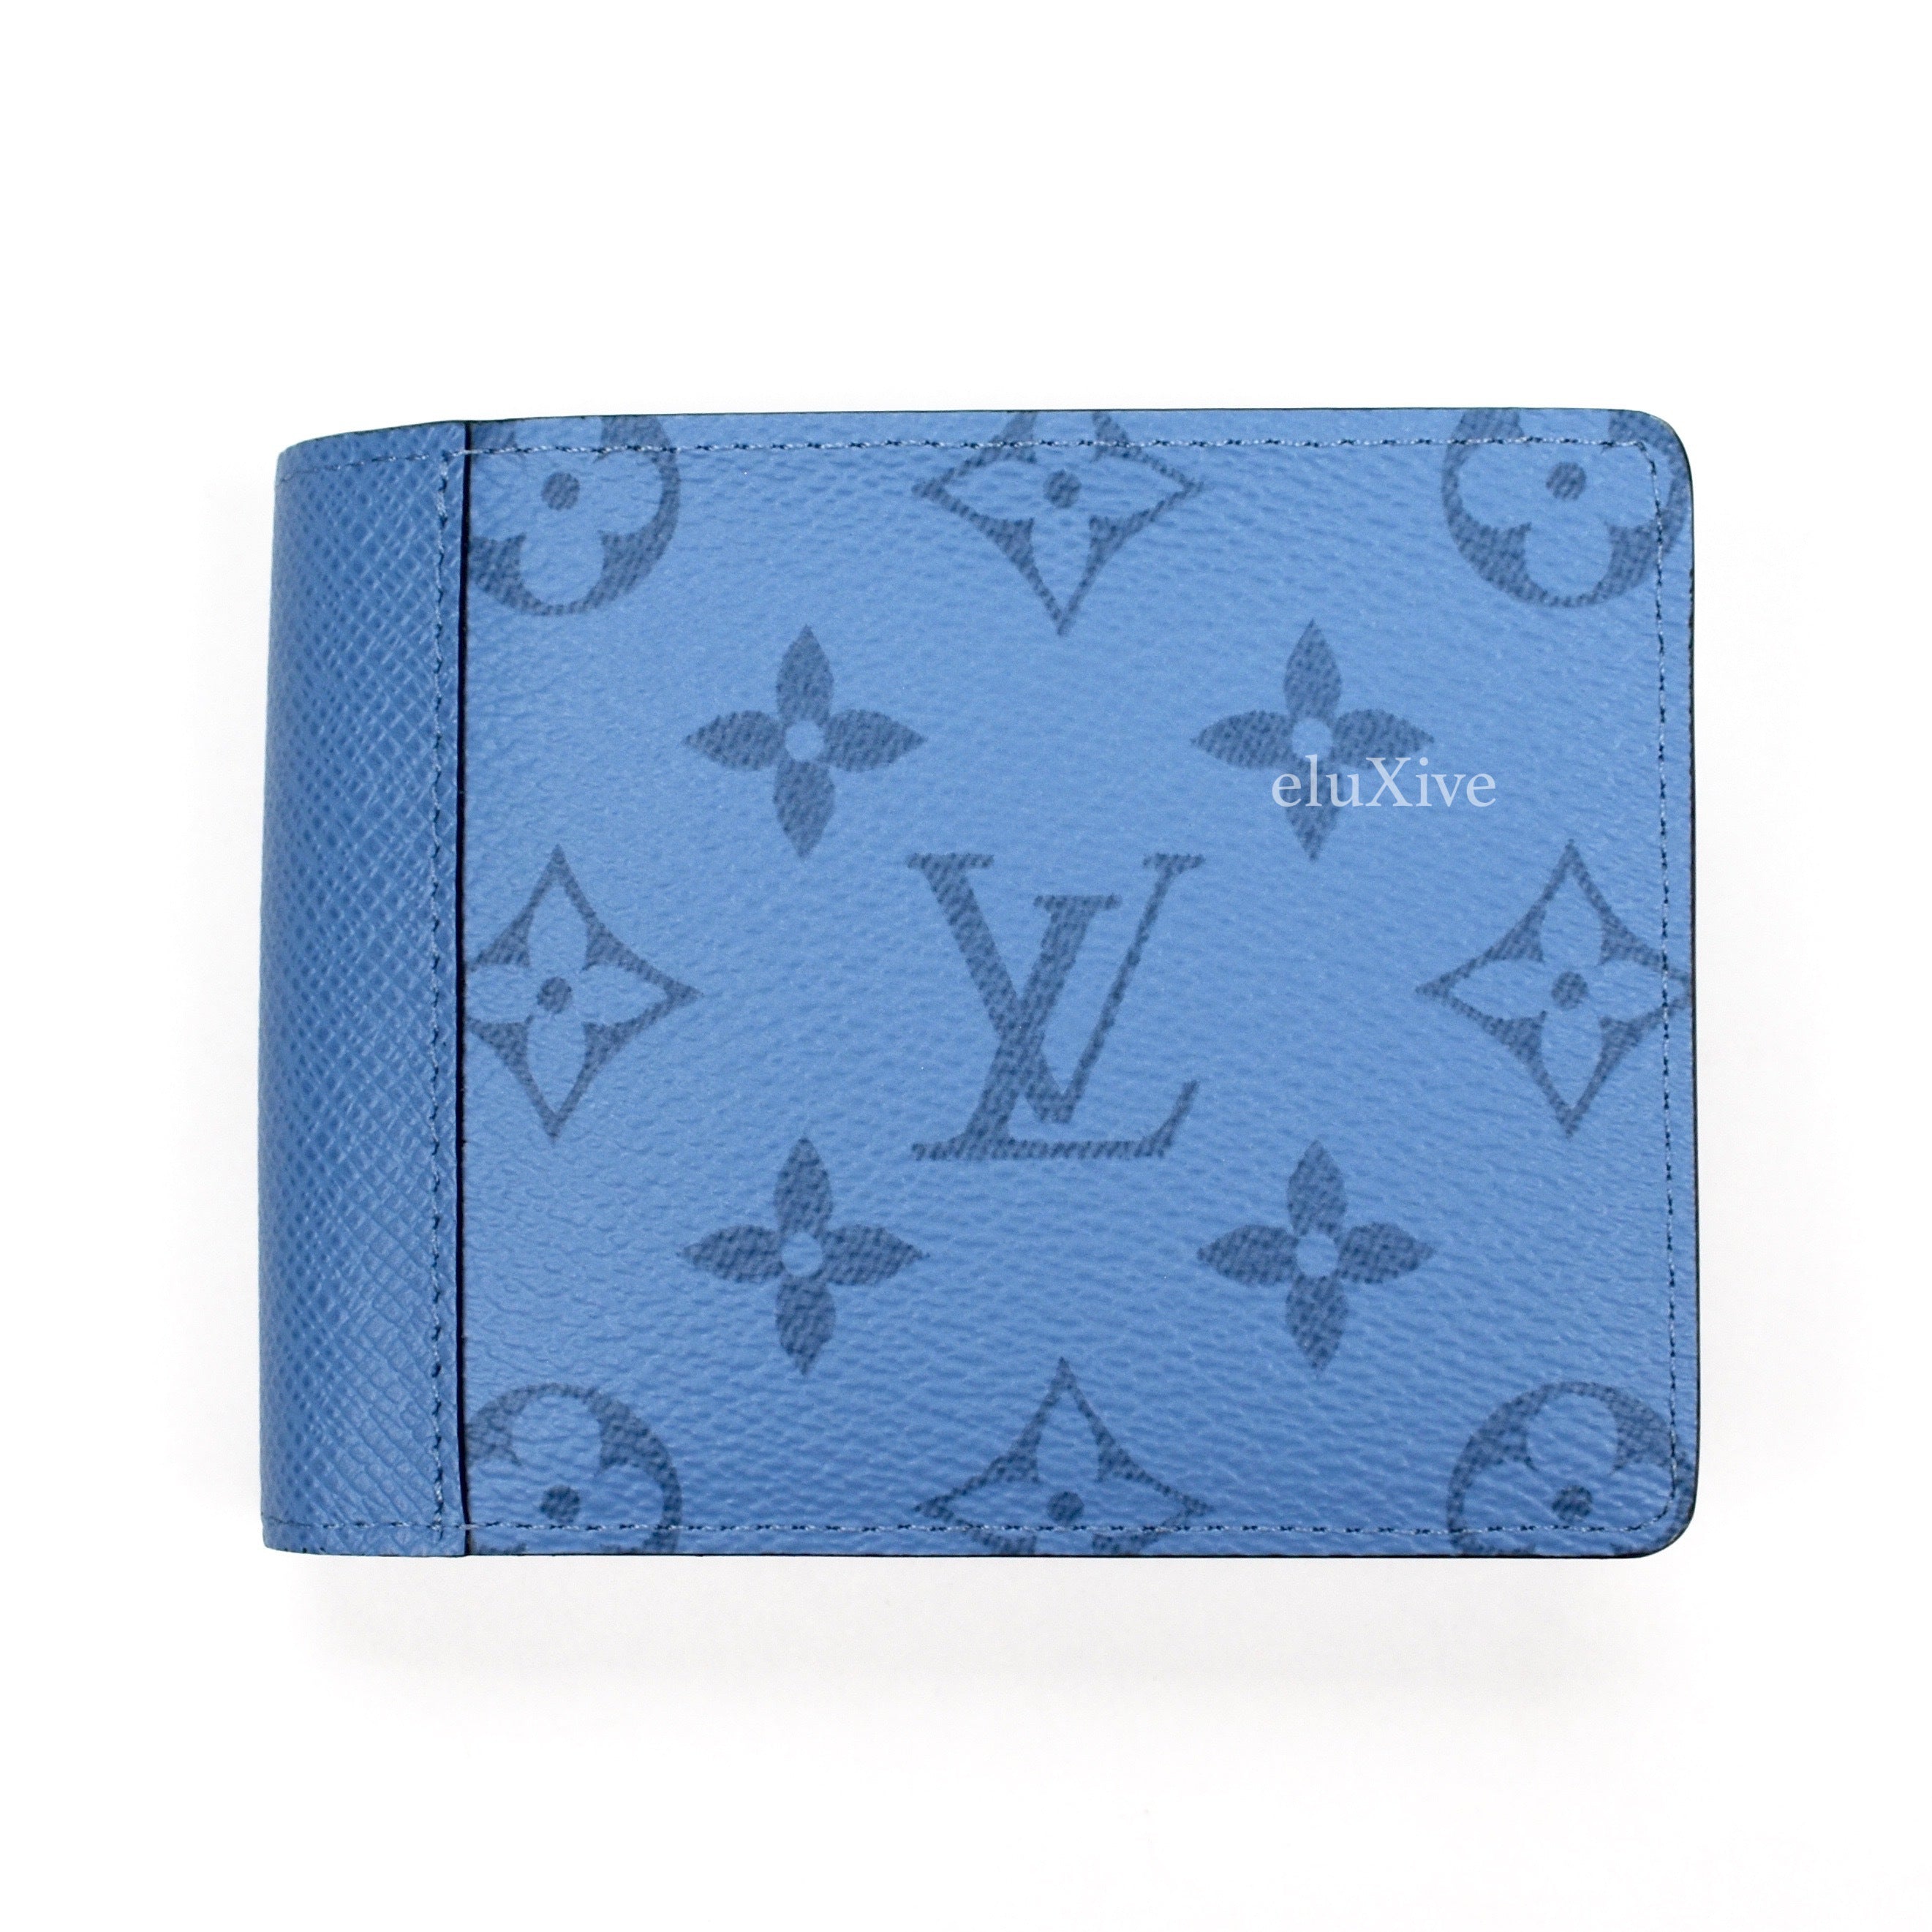 Louis Vuitton Multiple Wallet Monogram Blue in Coated Canvas - US